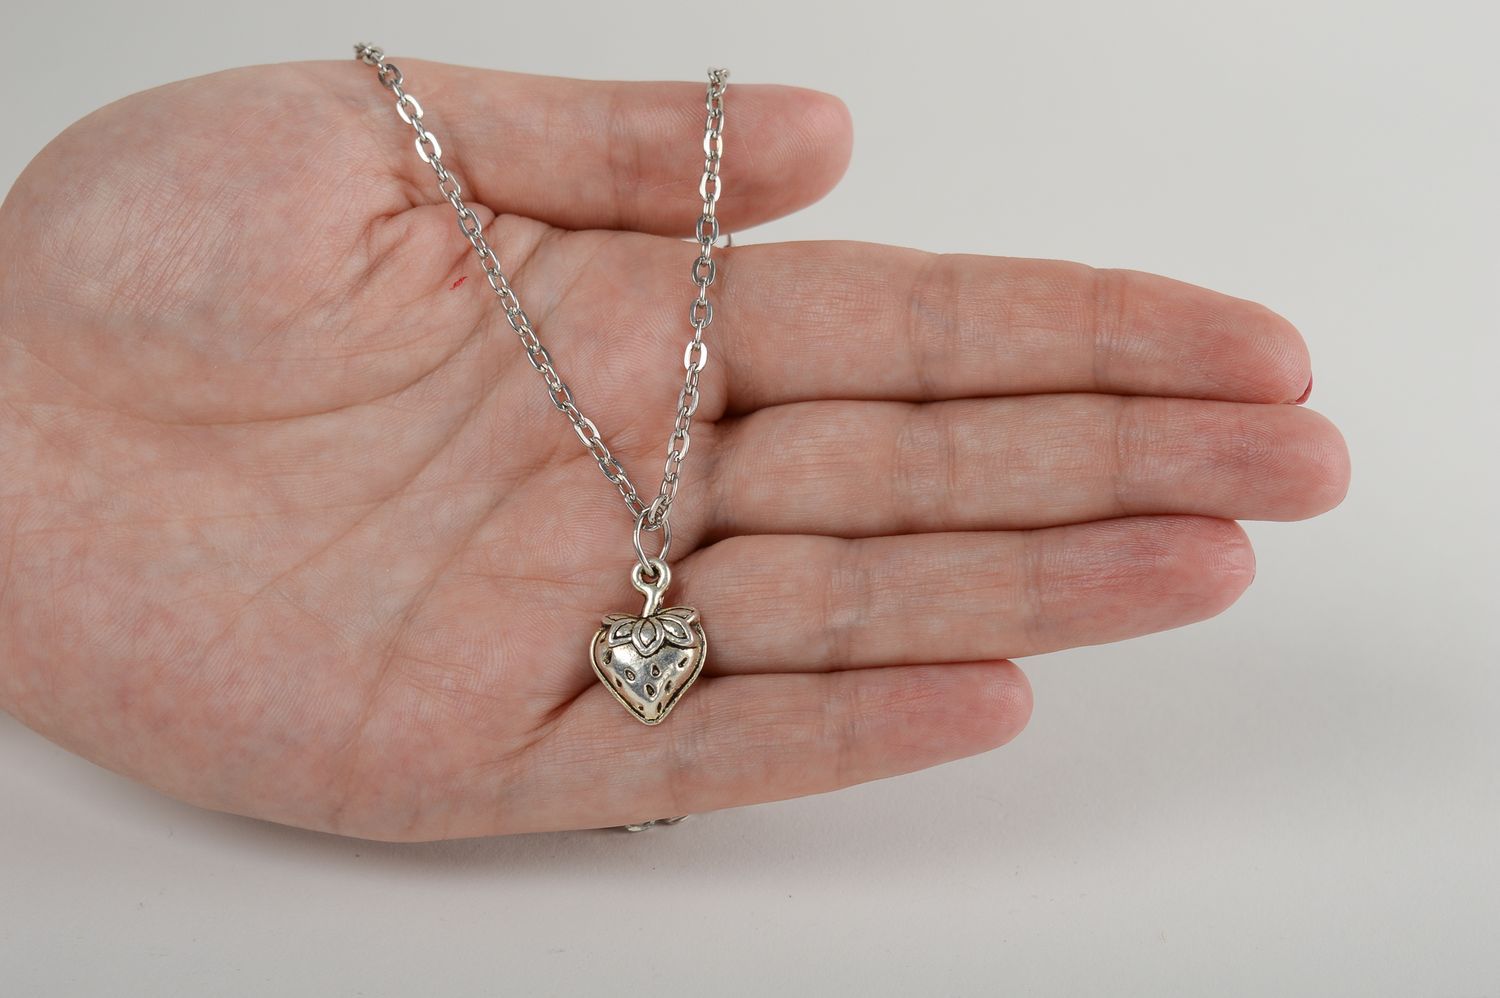 Handmade trendy pendant metal jewelry metal pendant stylish gift for women photo 5